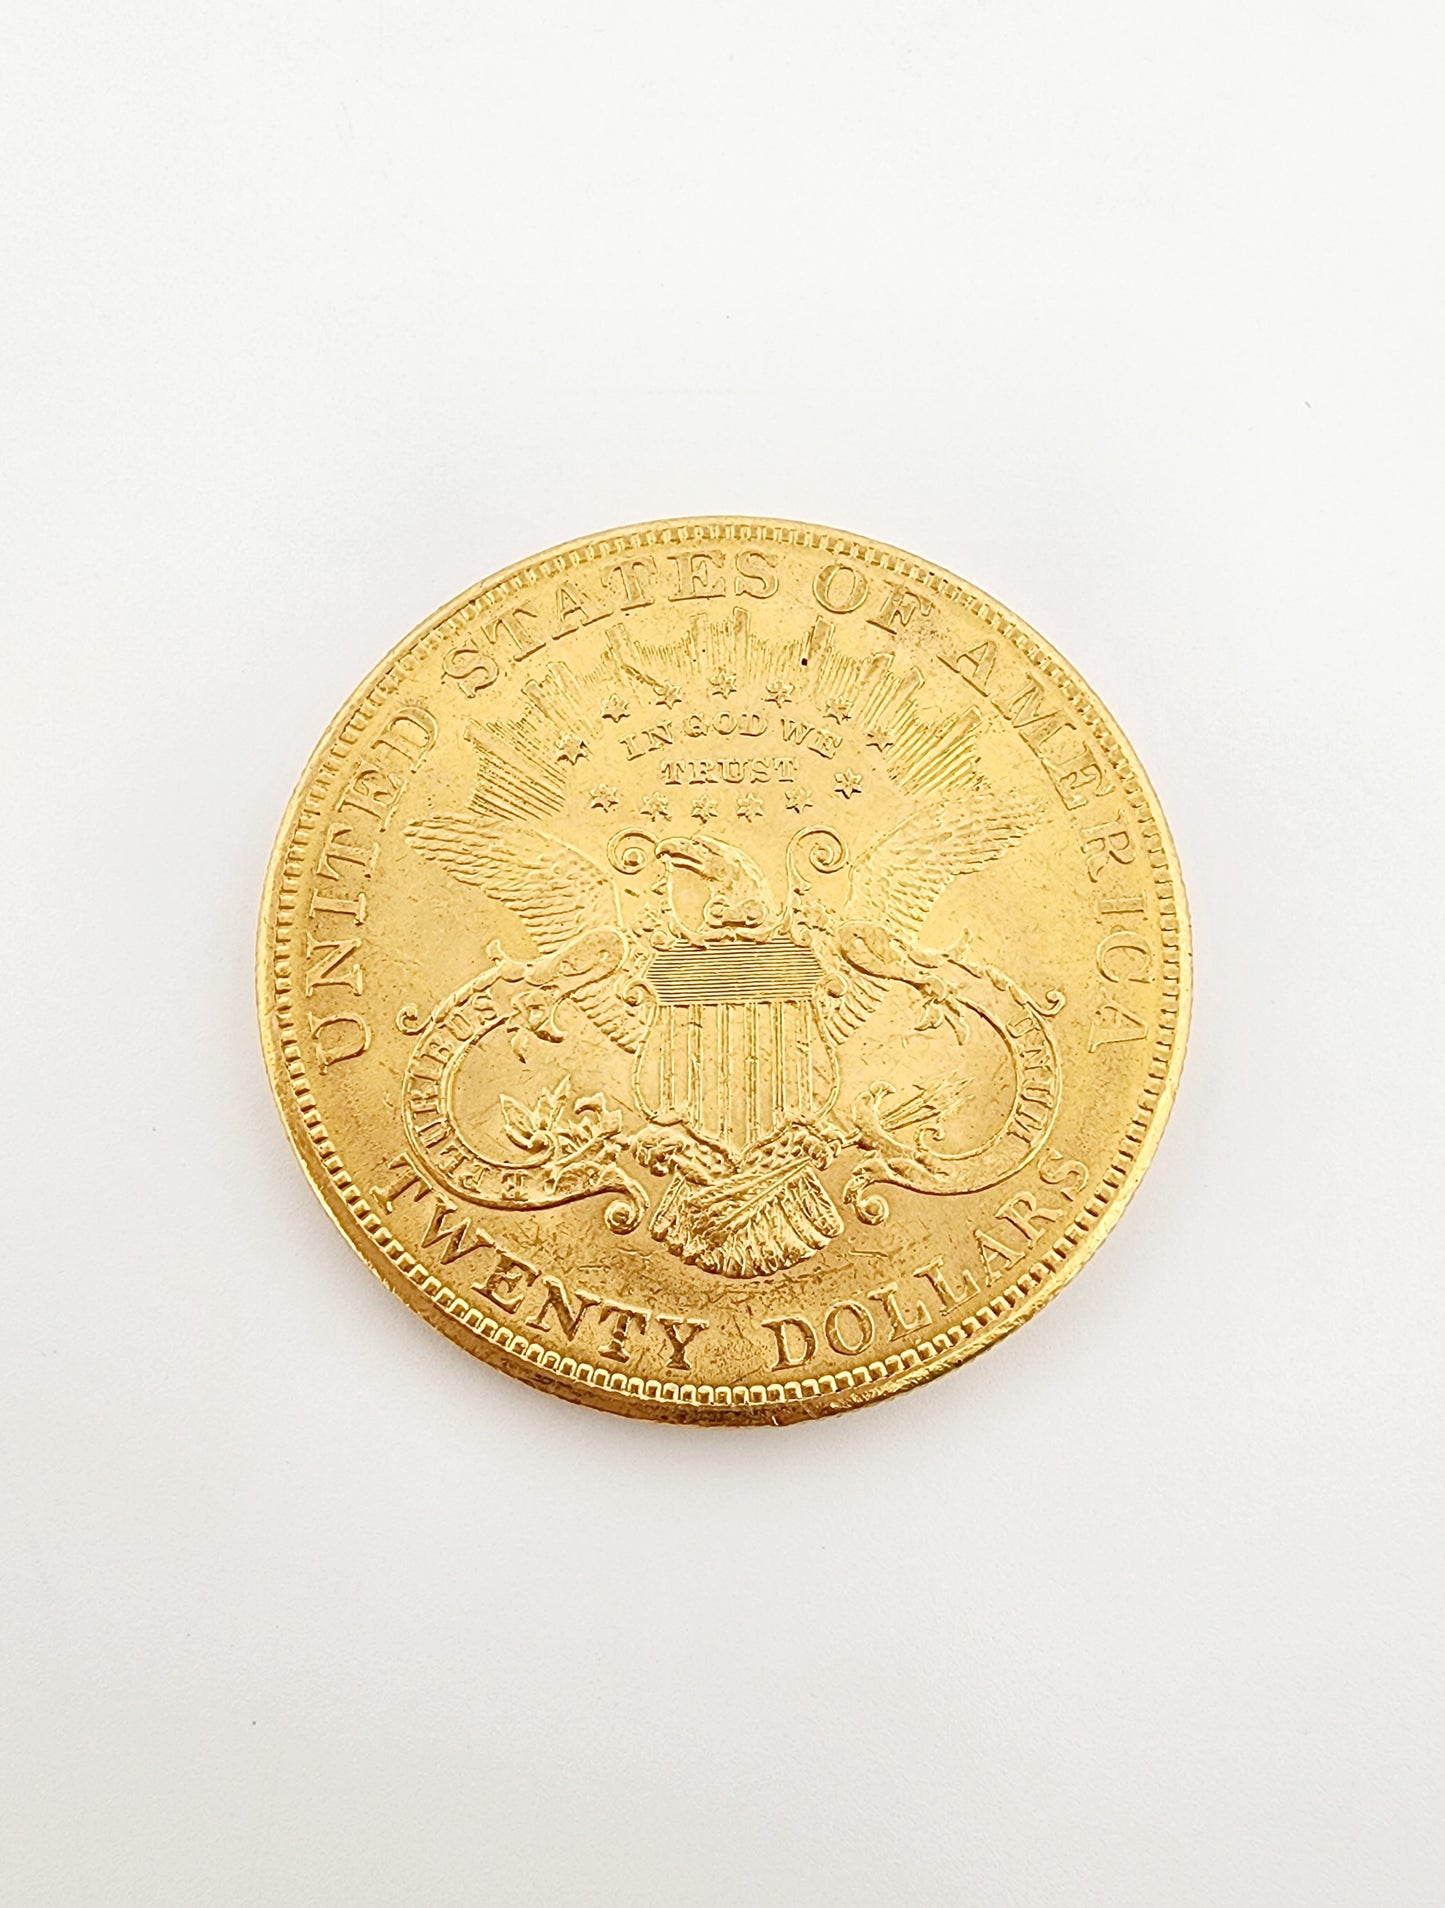 Moneda de $20 de 1904. 22k